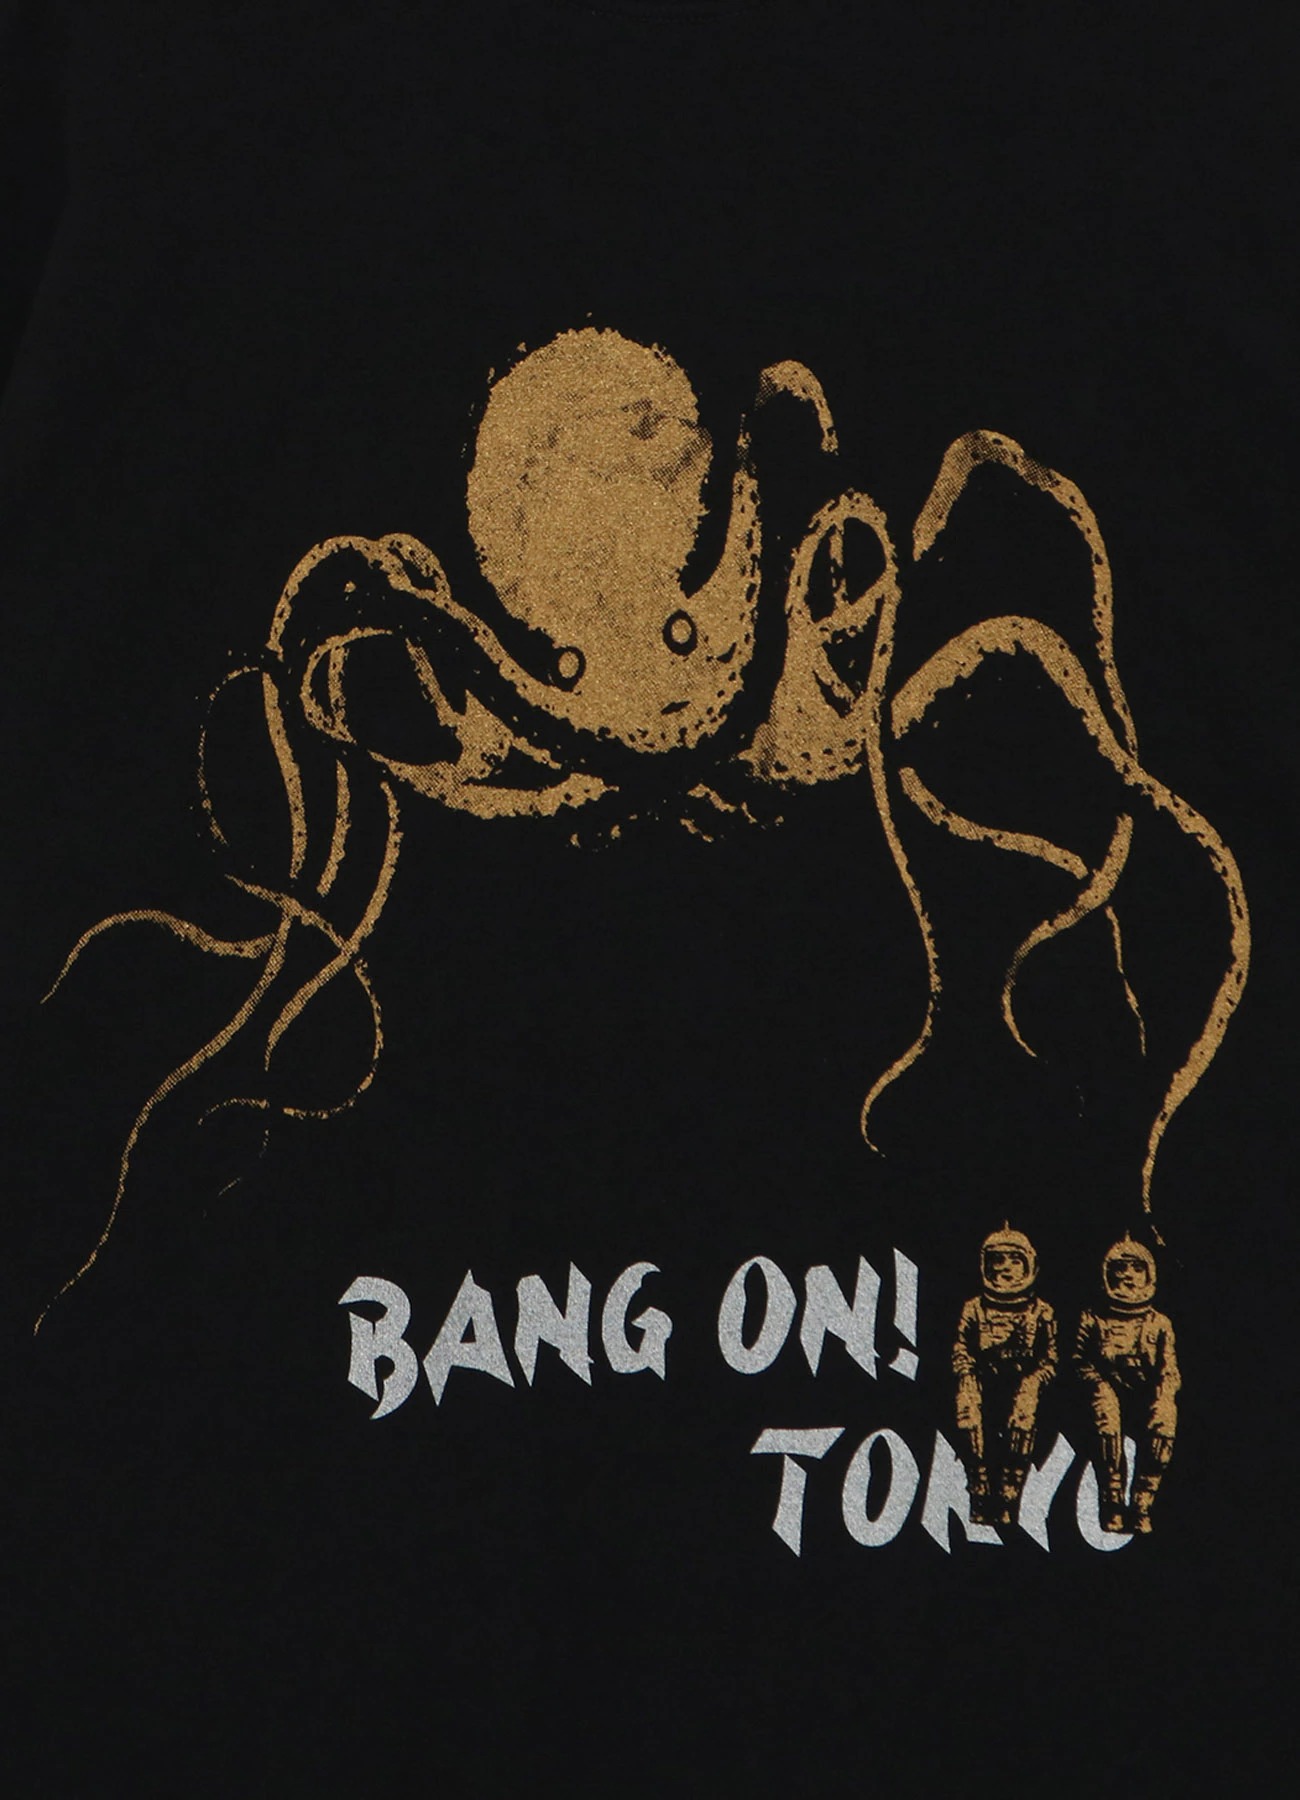 BANG ON!TOKYO Octopus T-shirts YK-T82-052-1-02